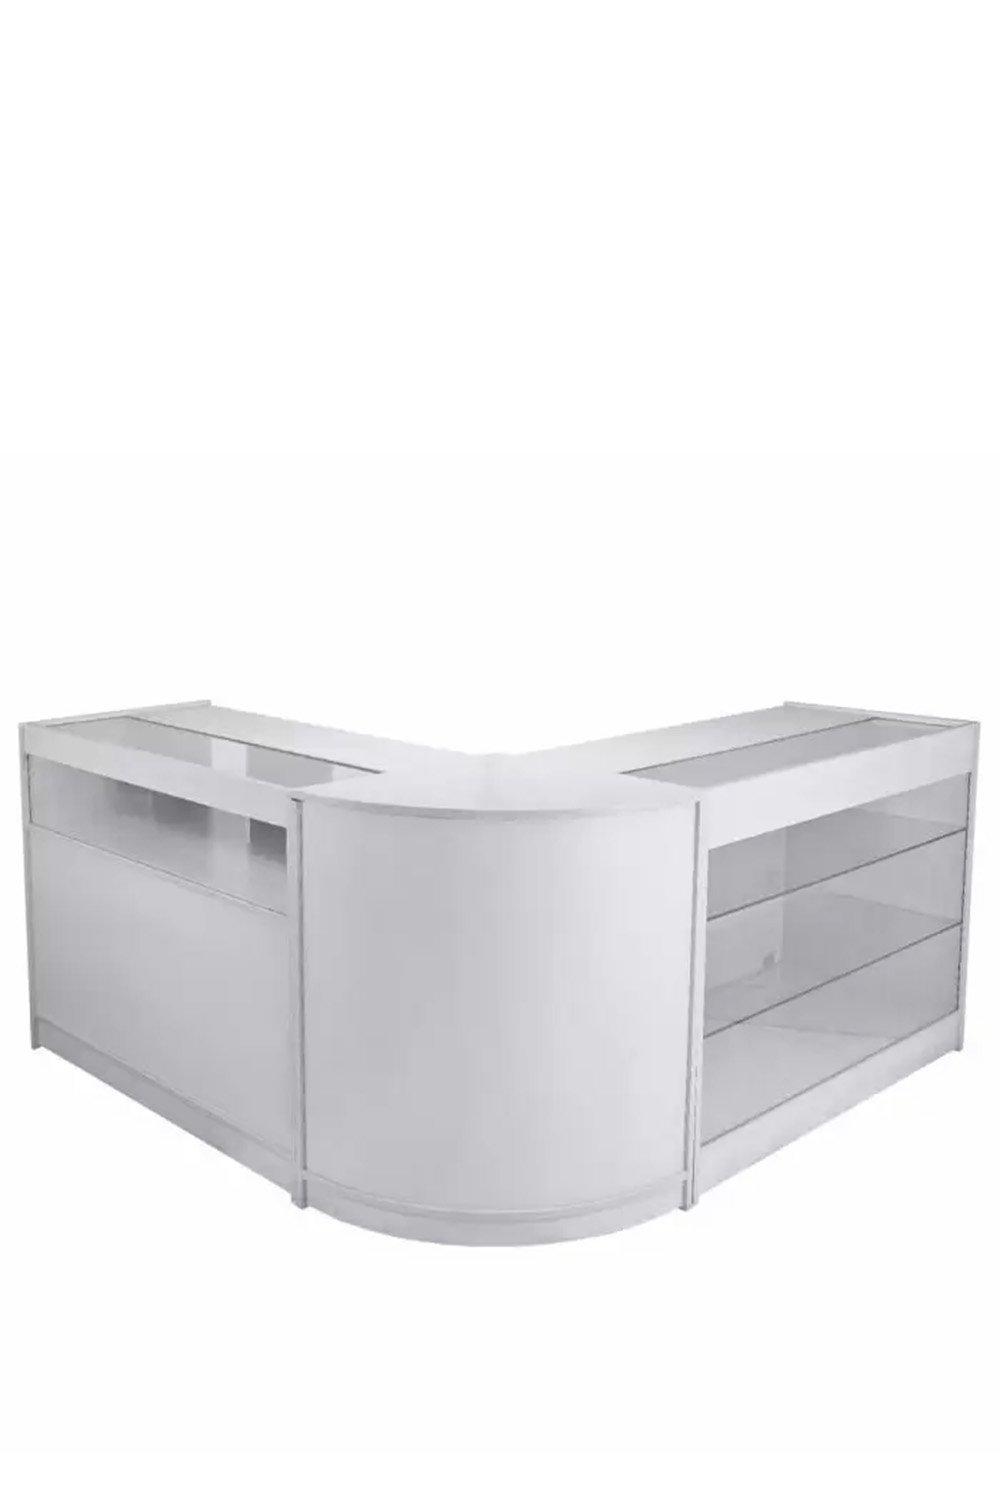 Taurus Brilliant White Shop Counter & Retail Display Set